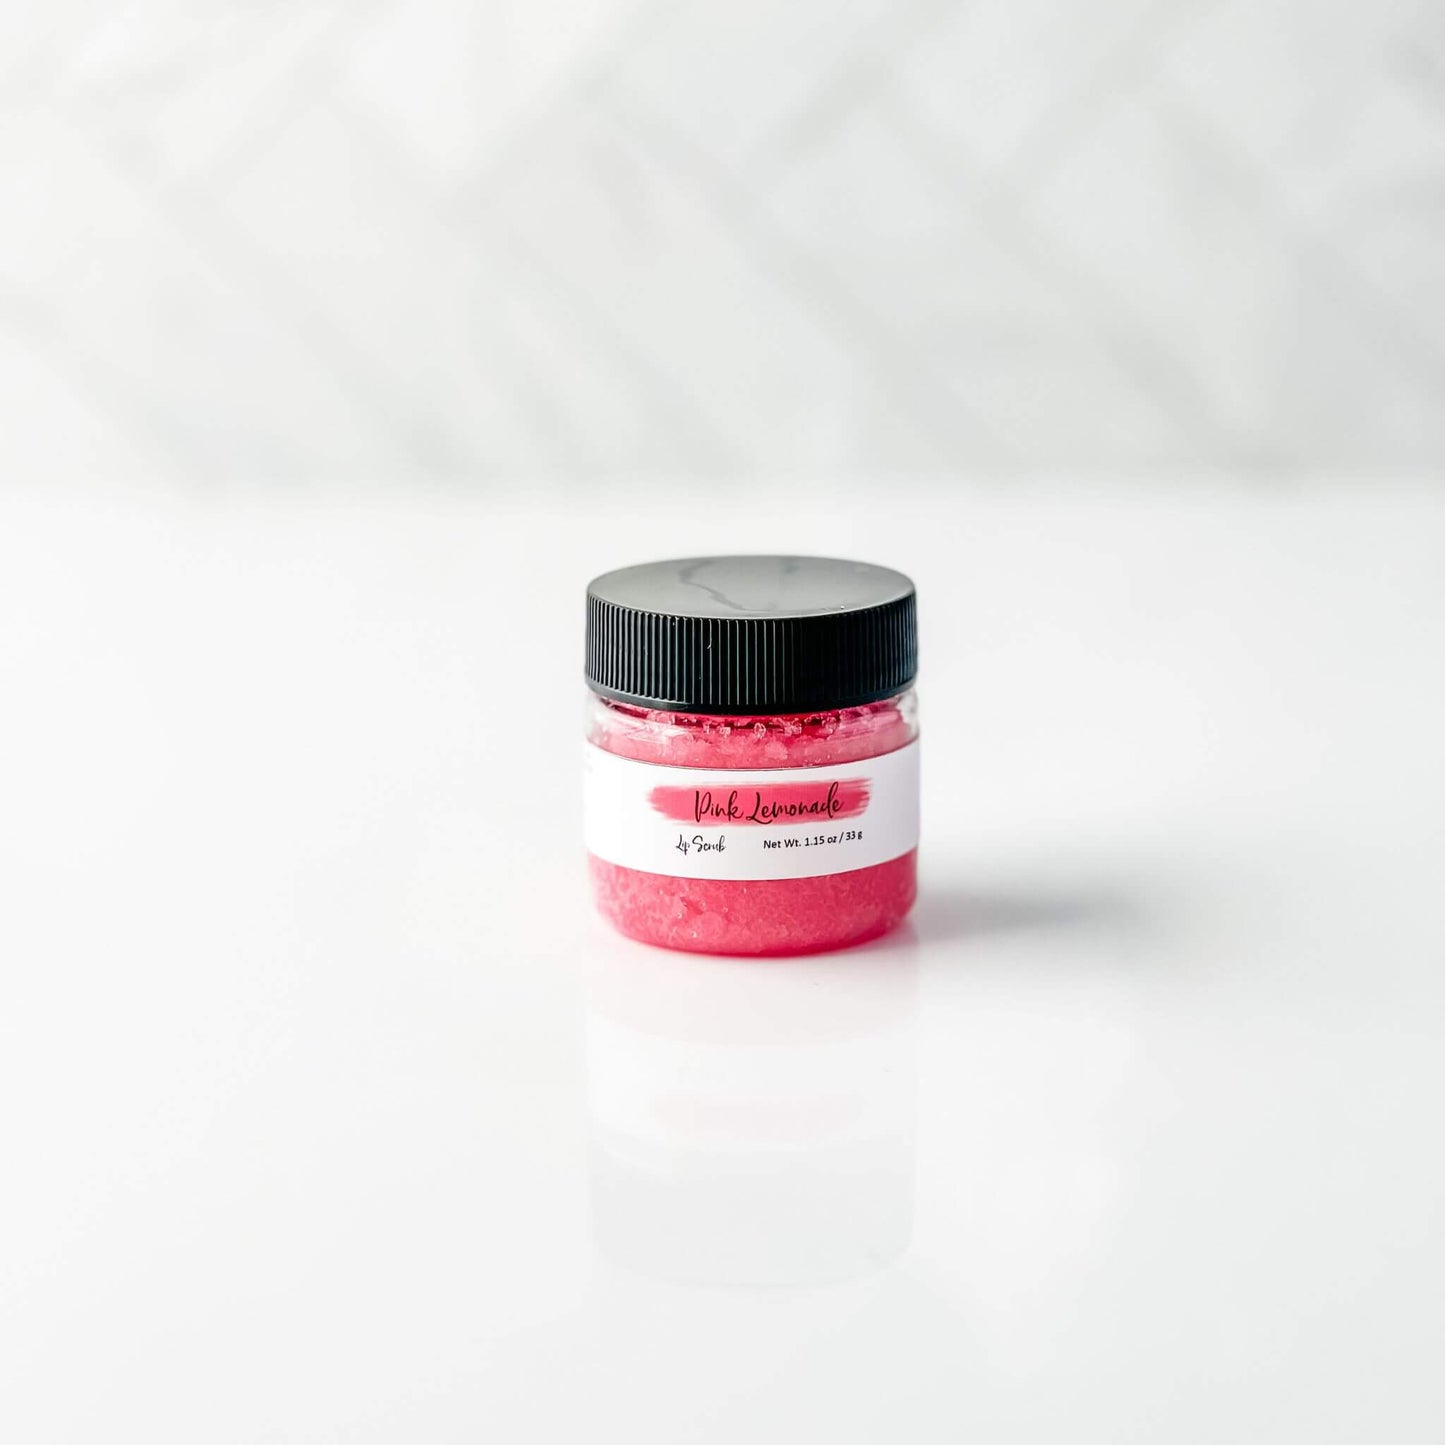 Lip Scrub 1 oz jar Pink Lemonade flavor (color pink)